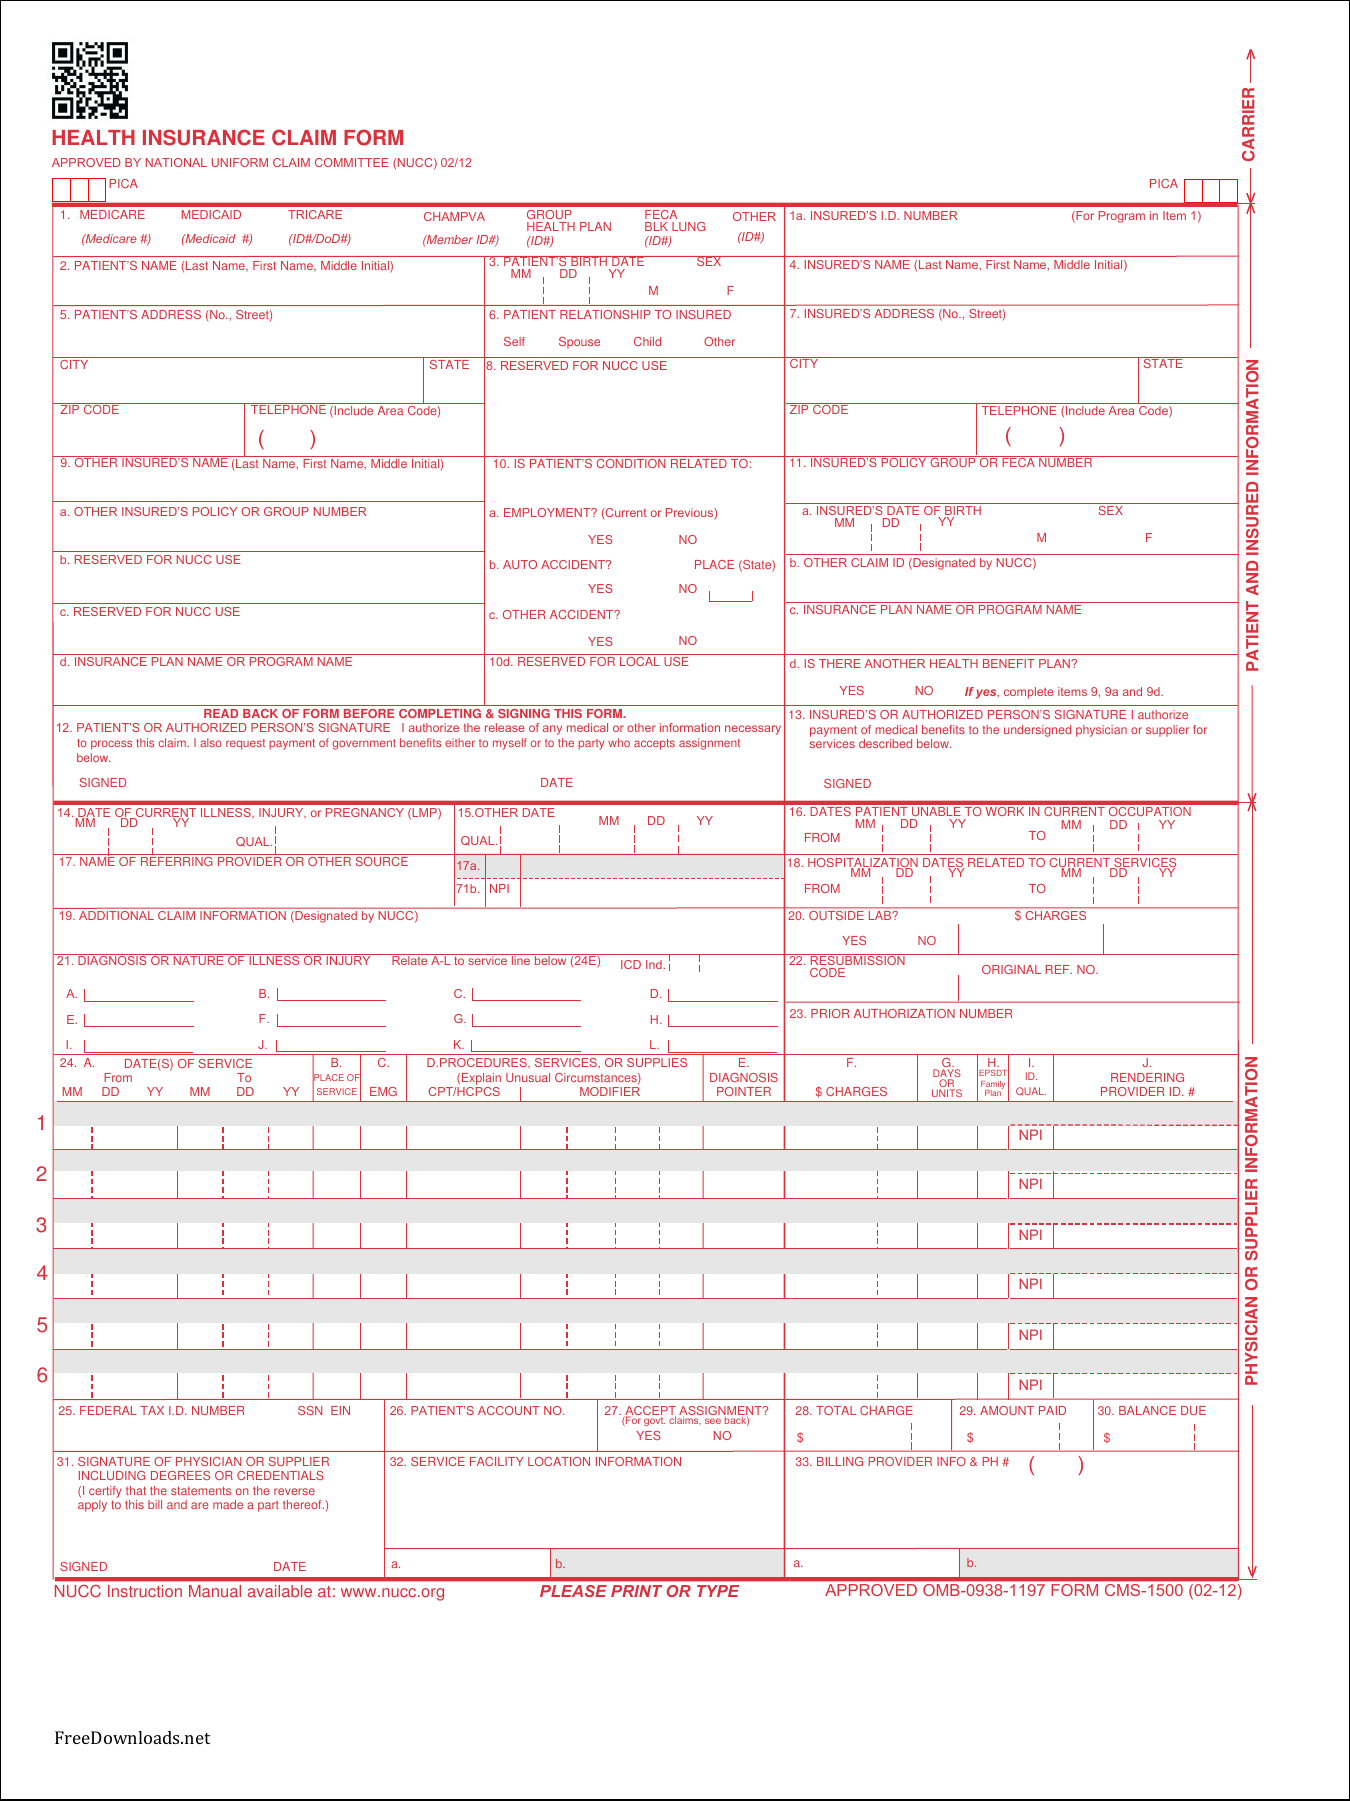 Cms 1500 Claim Form Printable